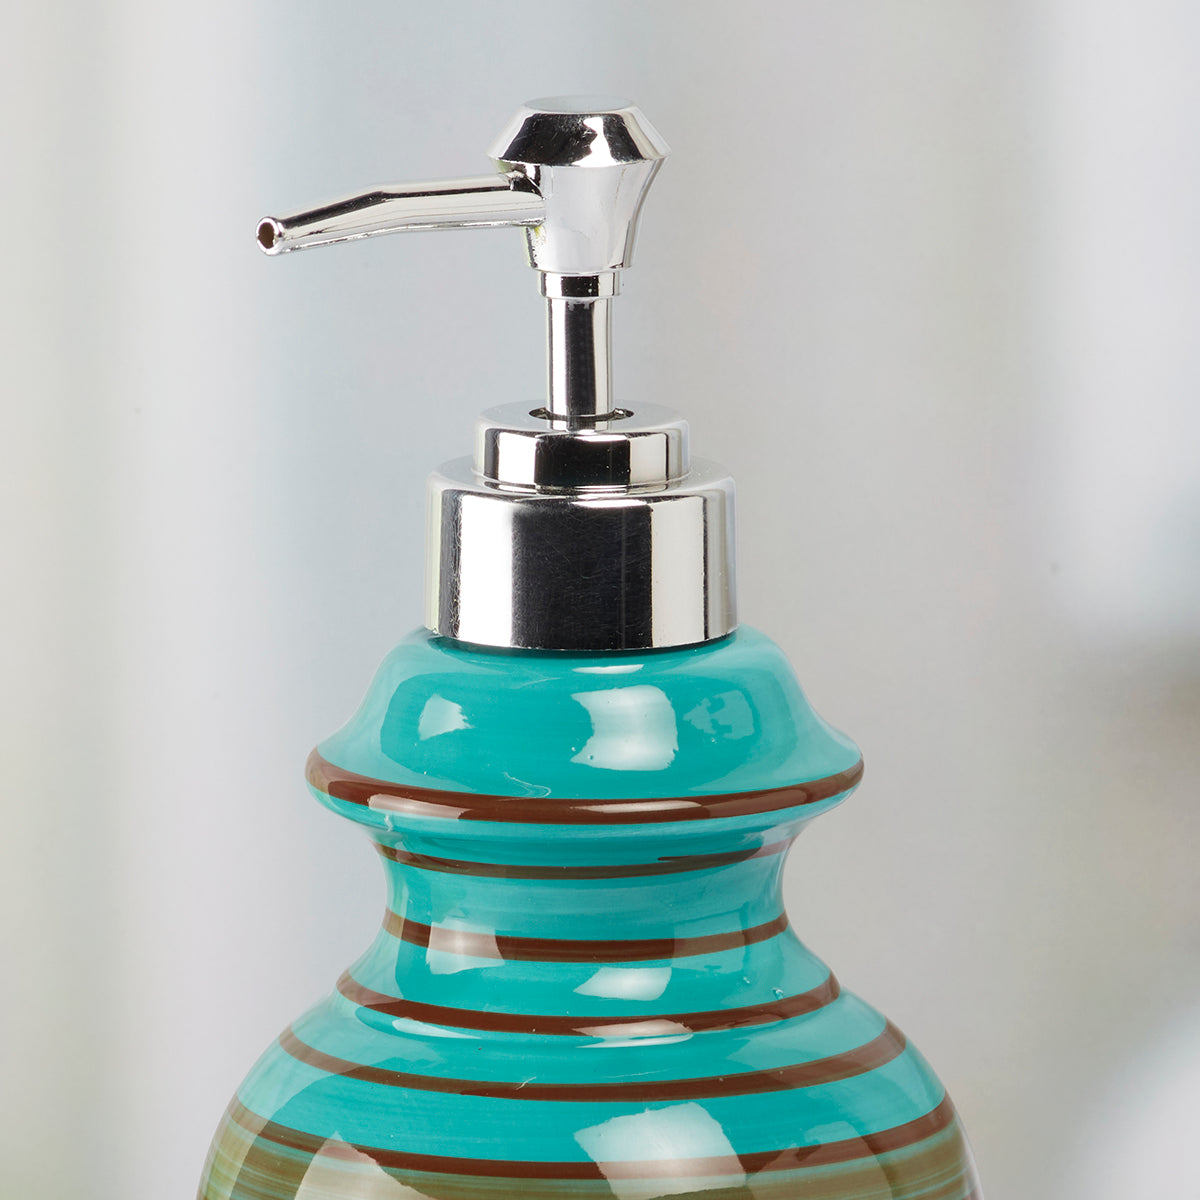 Ceramic Soap Dispenser handwash Pump for Bathroom, Set of 1, Brown/Blue (7638)